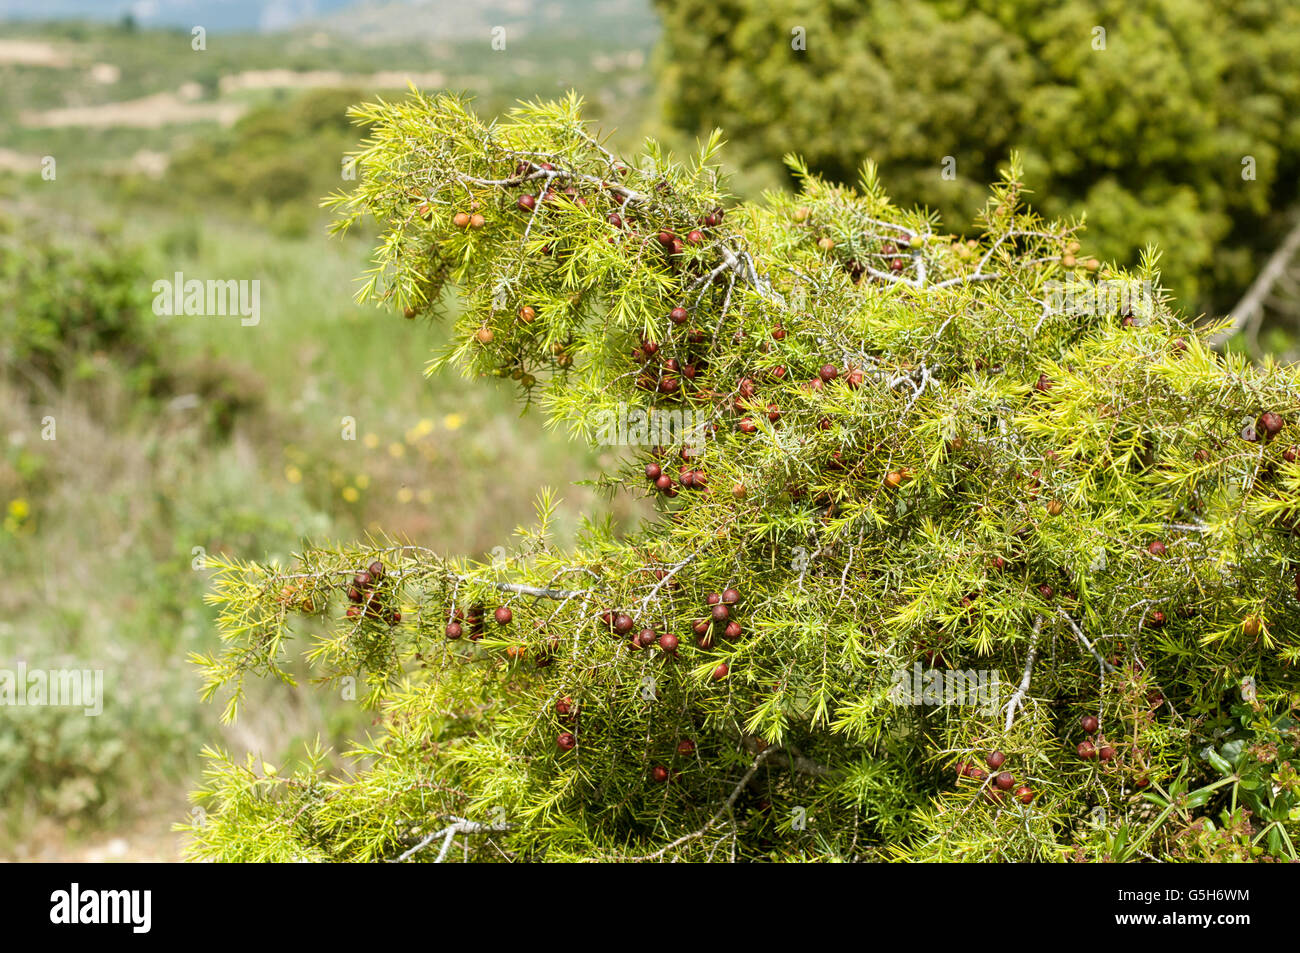 Common juniper, Juniperus communis. Horizontal portrait of shrub showing berries. Stock Photo